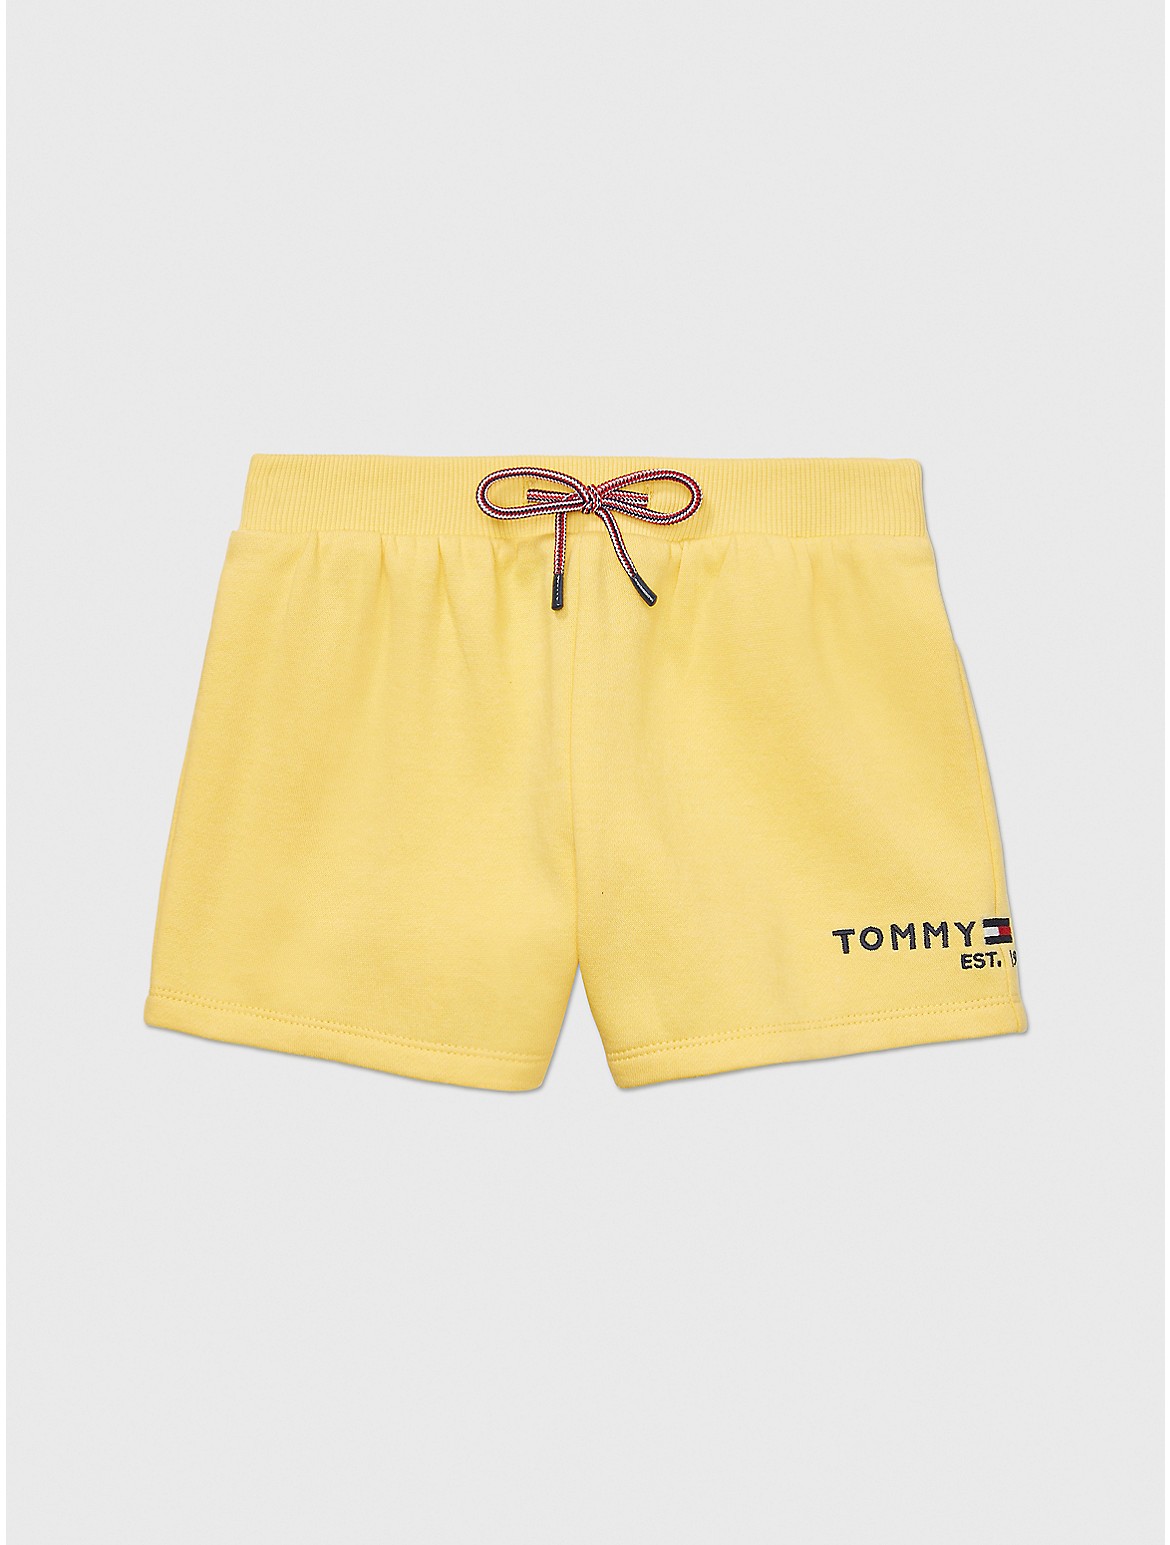 Tommy Hilfiger Girls' Classic Knit Short - Yellow - L